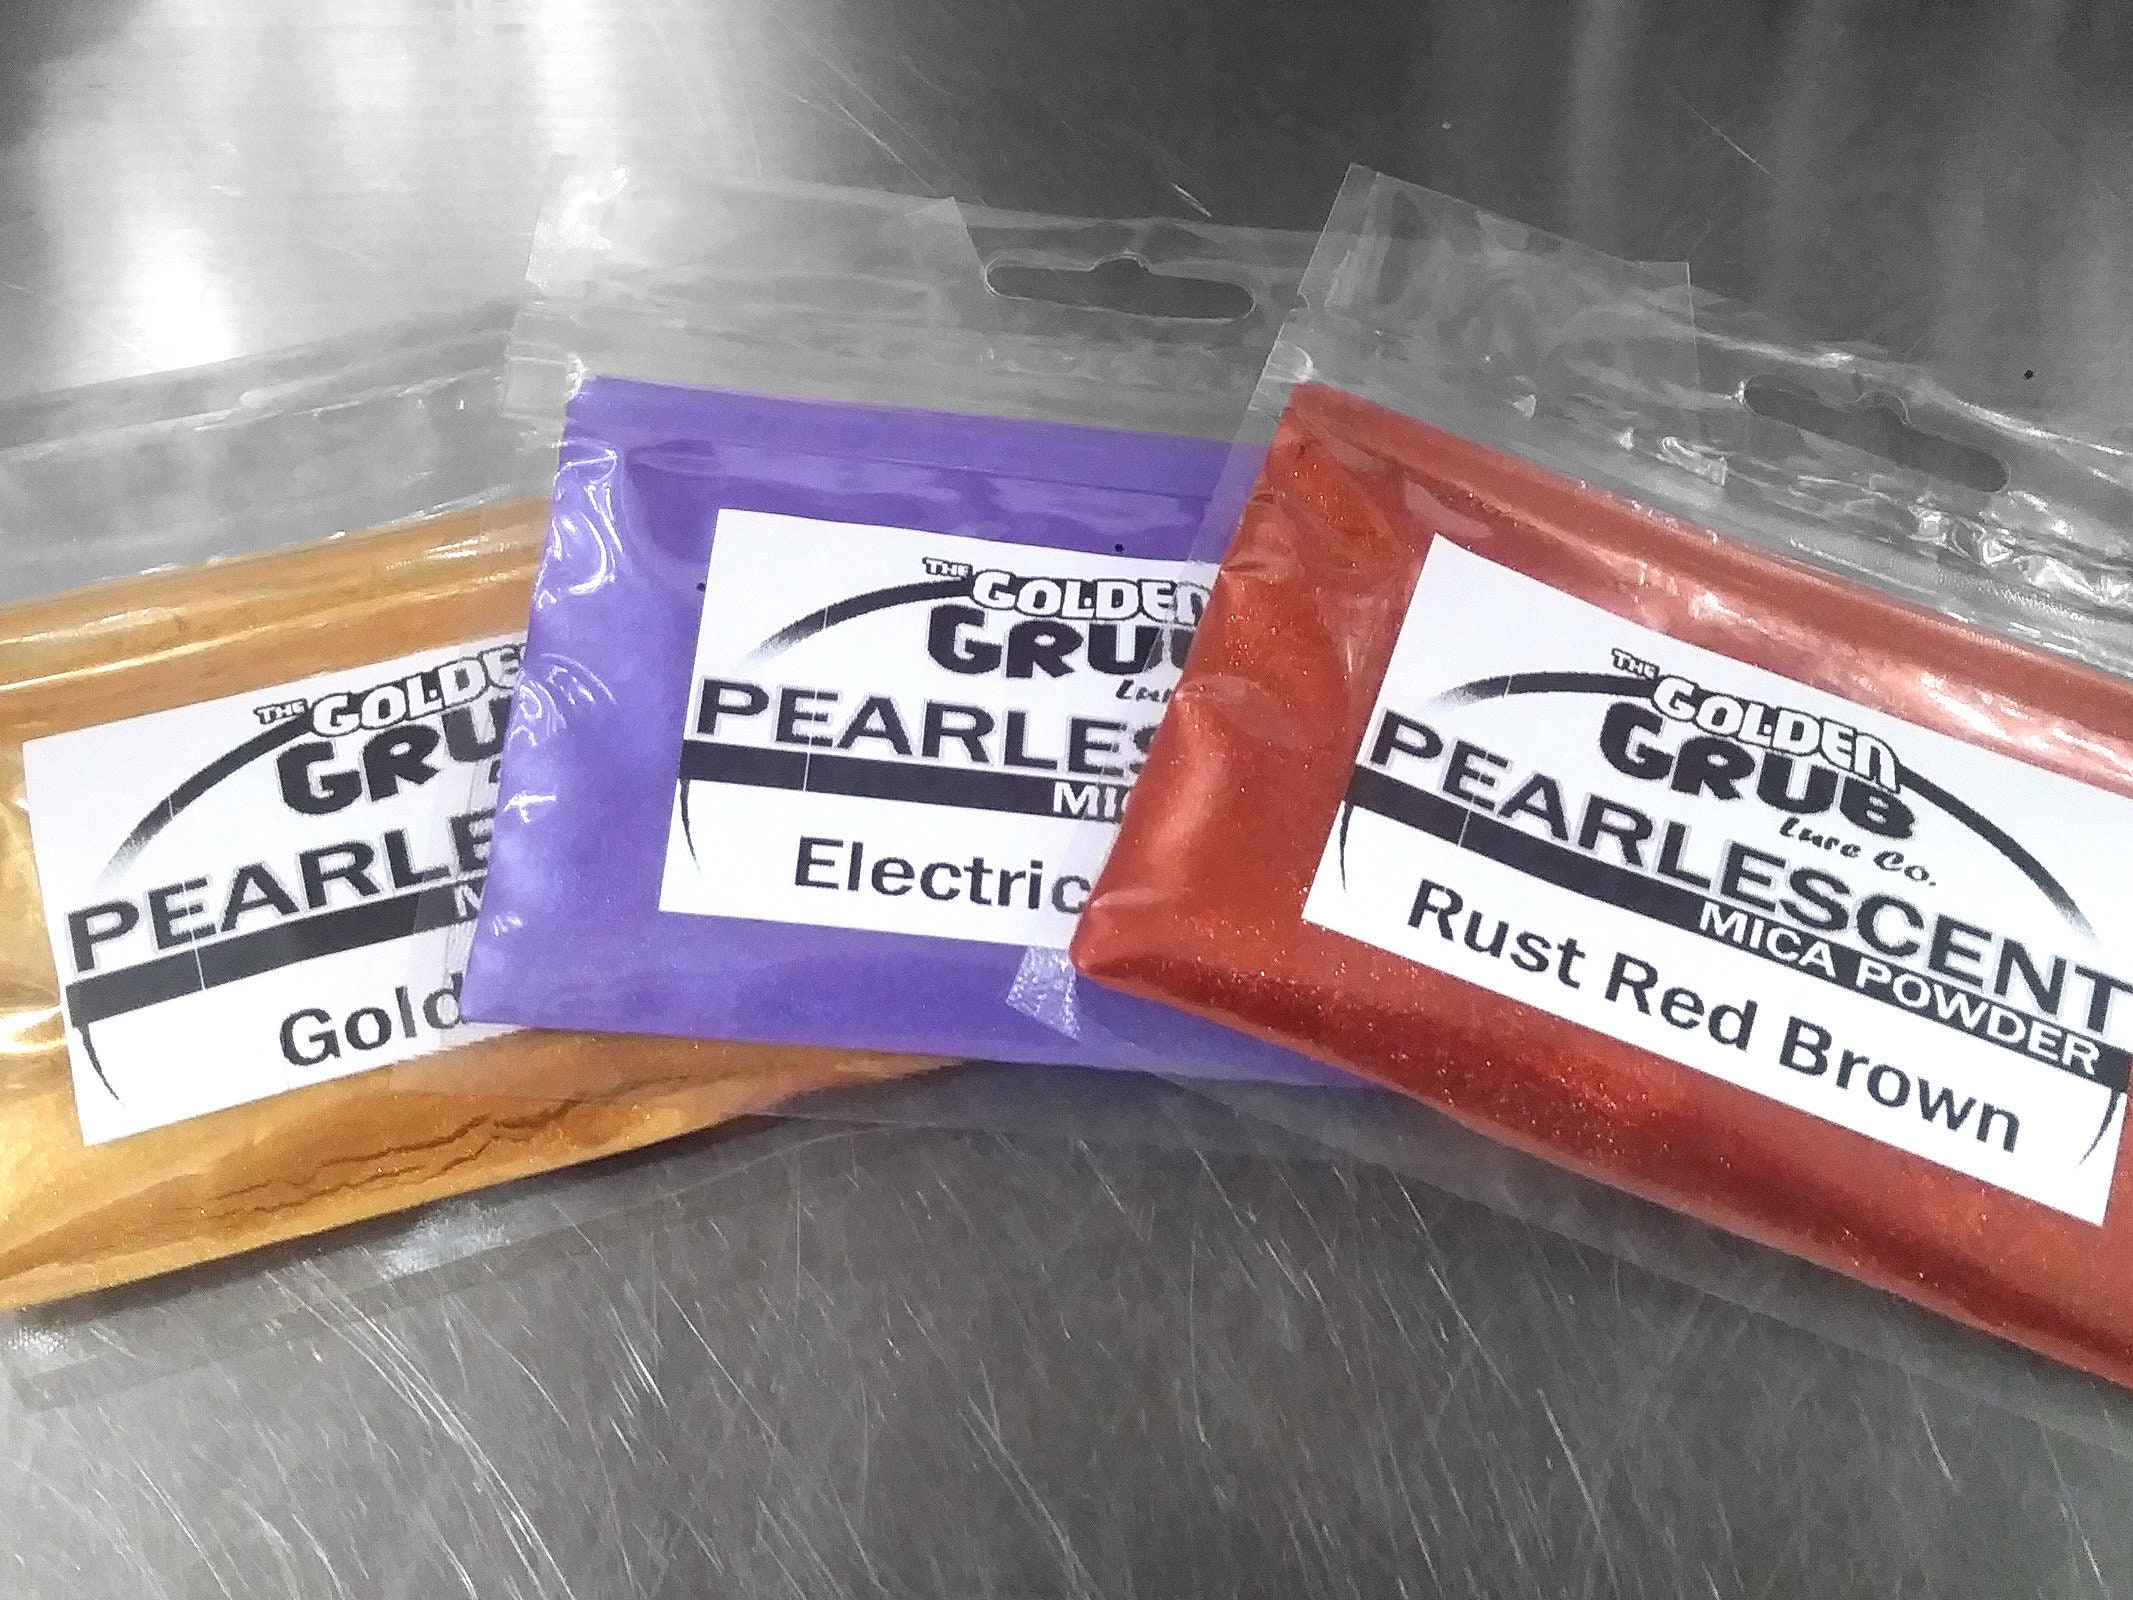 NEW Liquid Plastic SUPER STARTER Set Craw Mold Kit Oil/bags Plastisol  Fishing Lure Bait Making, Easy to Learn & Fun 